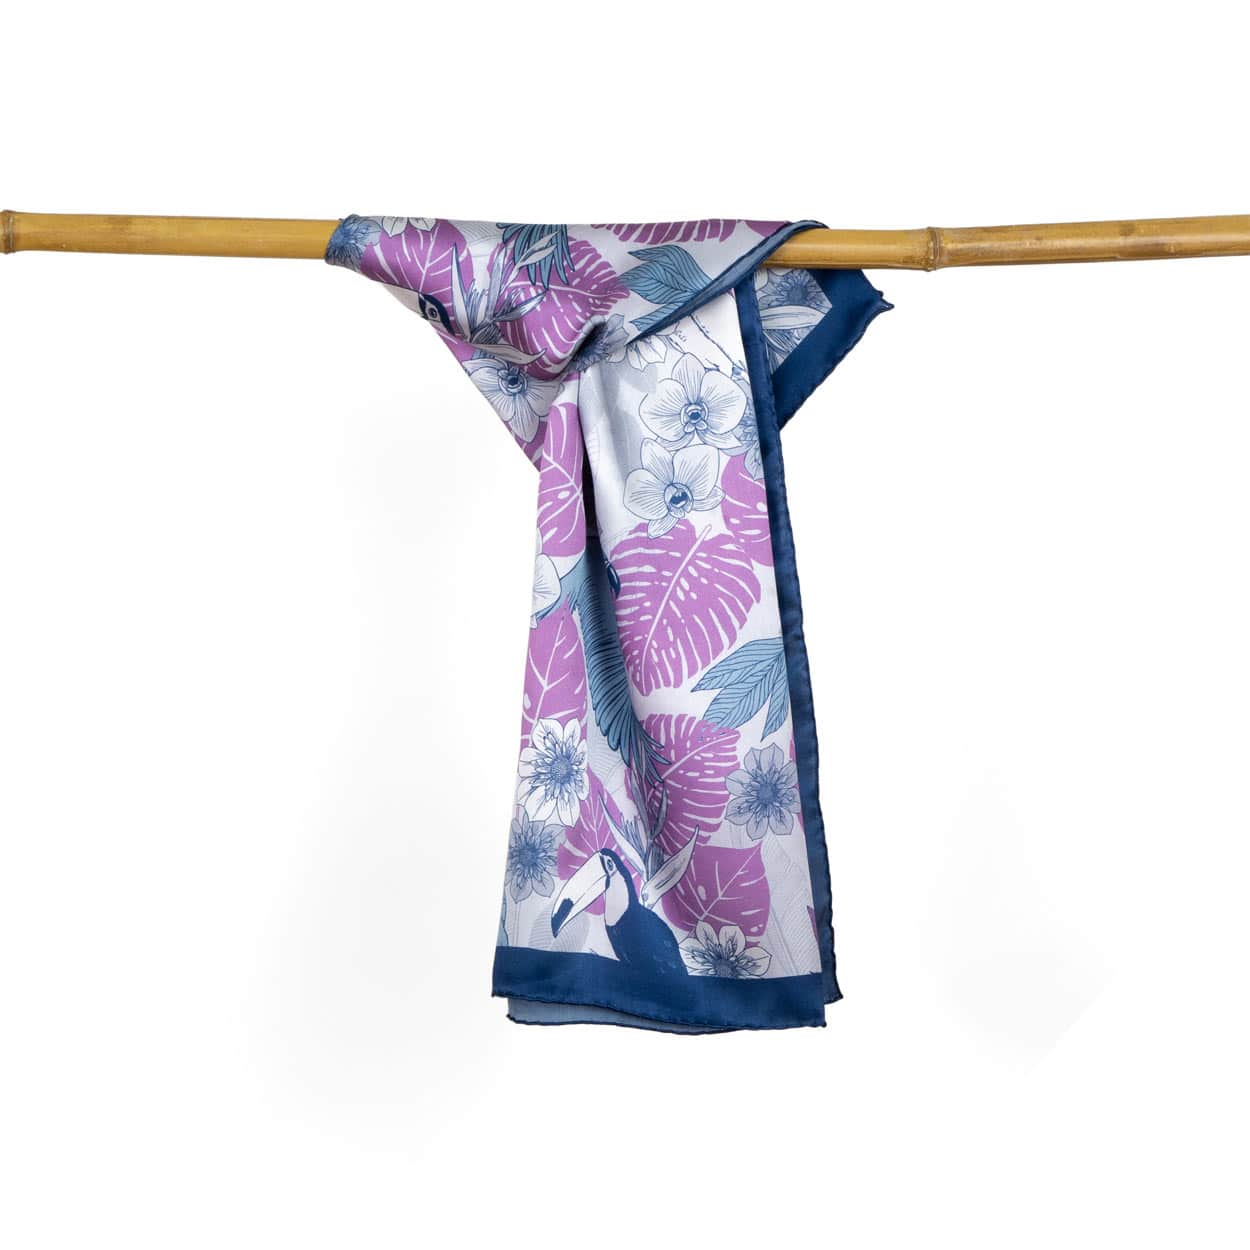 Pañuelo de seda con print tropical en tonos morados y azules